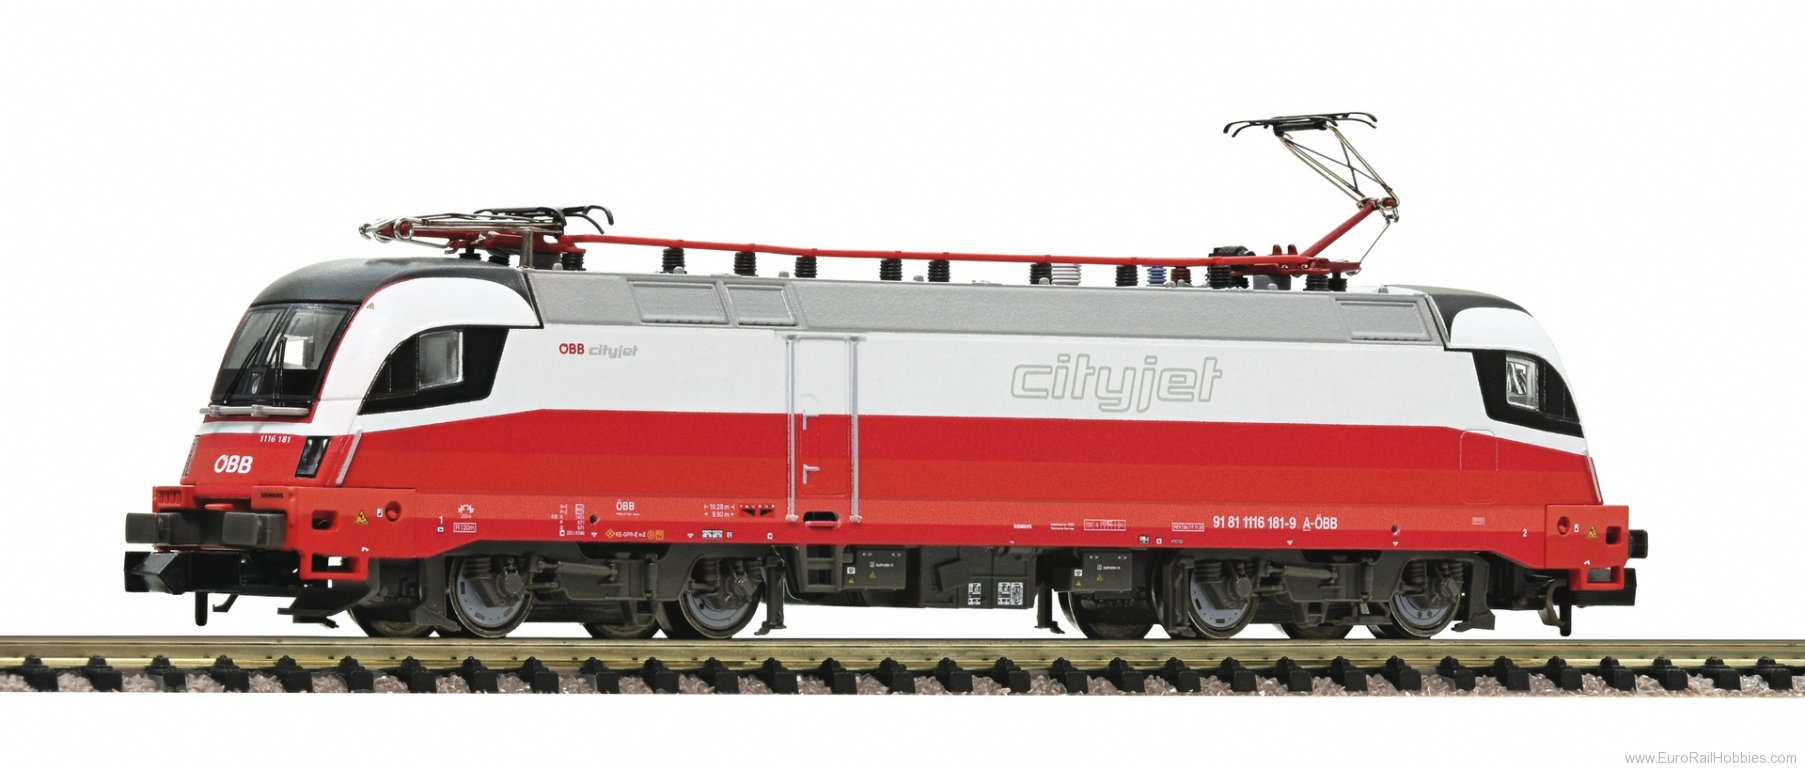 Fleischmann 7570016 Electric locomotive 1116 181-9 ÃBB (Digita